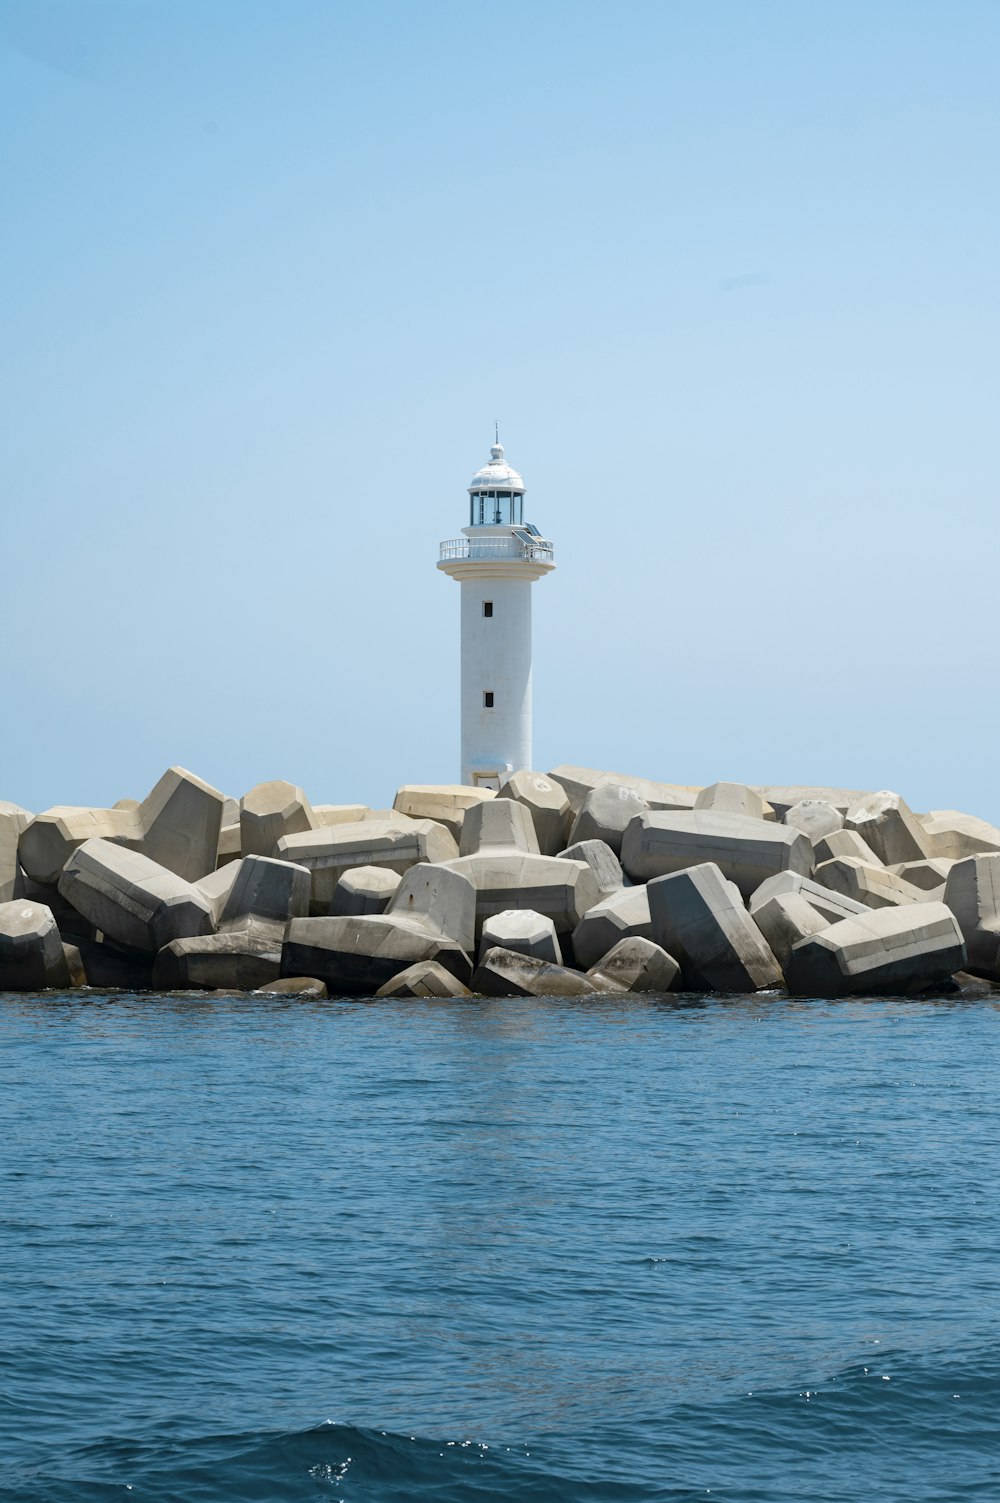 a lighthouse on a rocky island